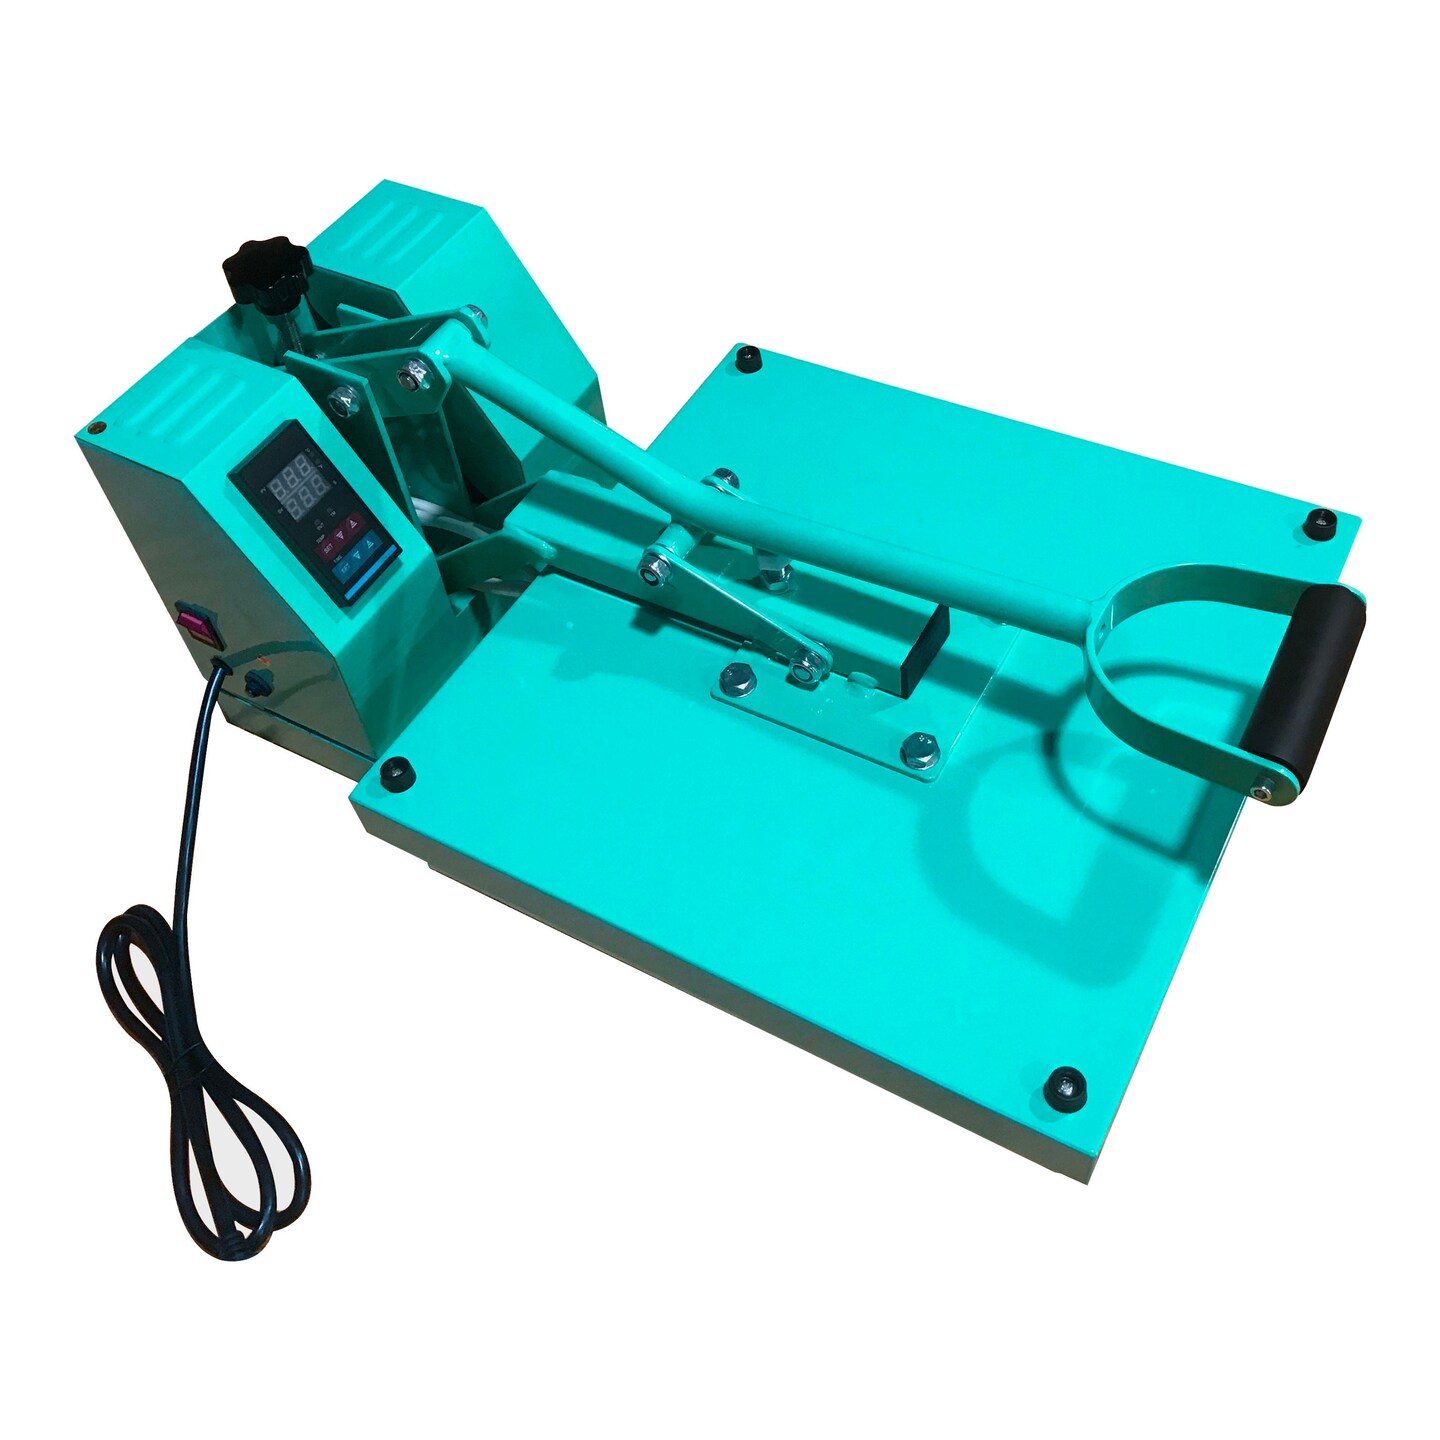 Swing Design 15 x 15 Craft Heat Press - Turquoise